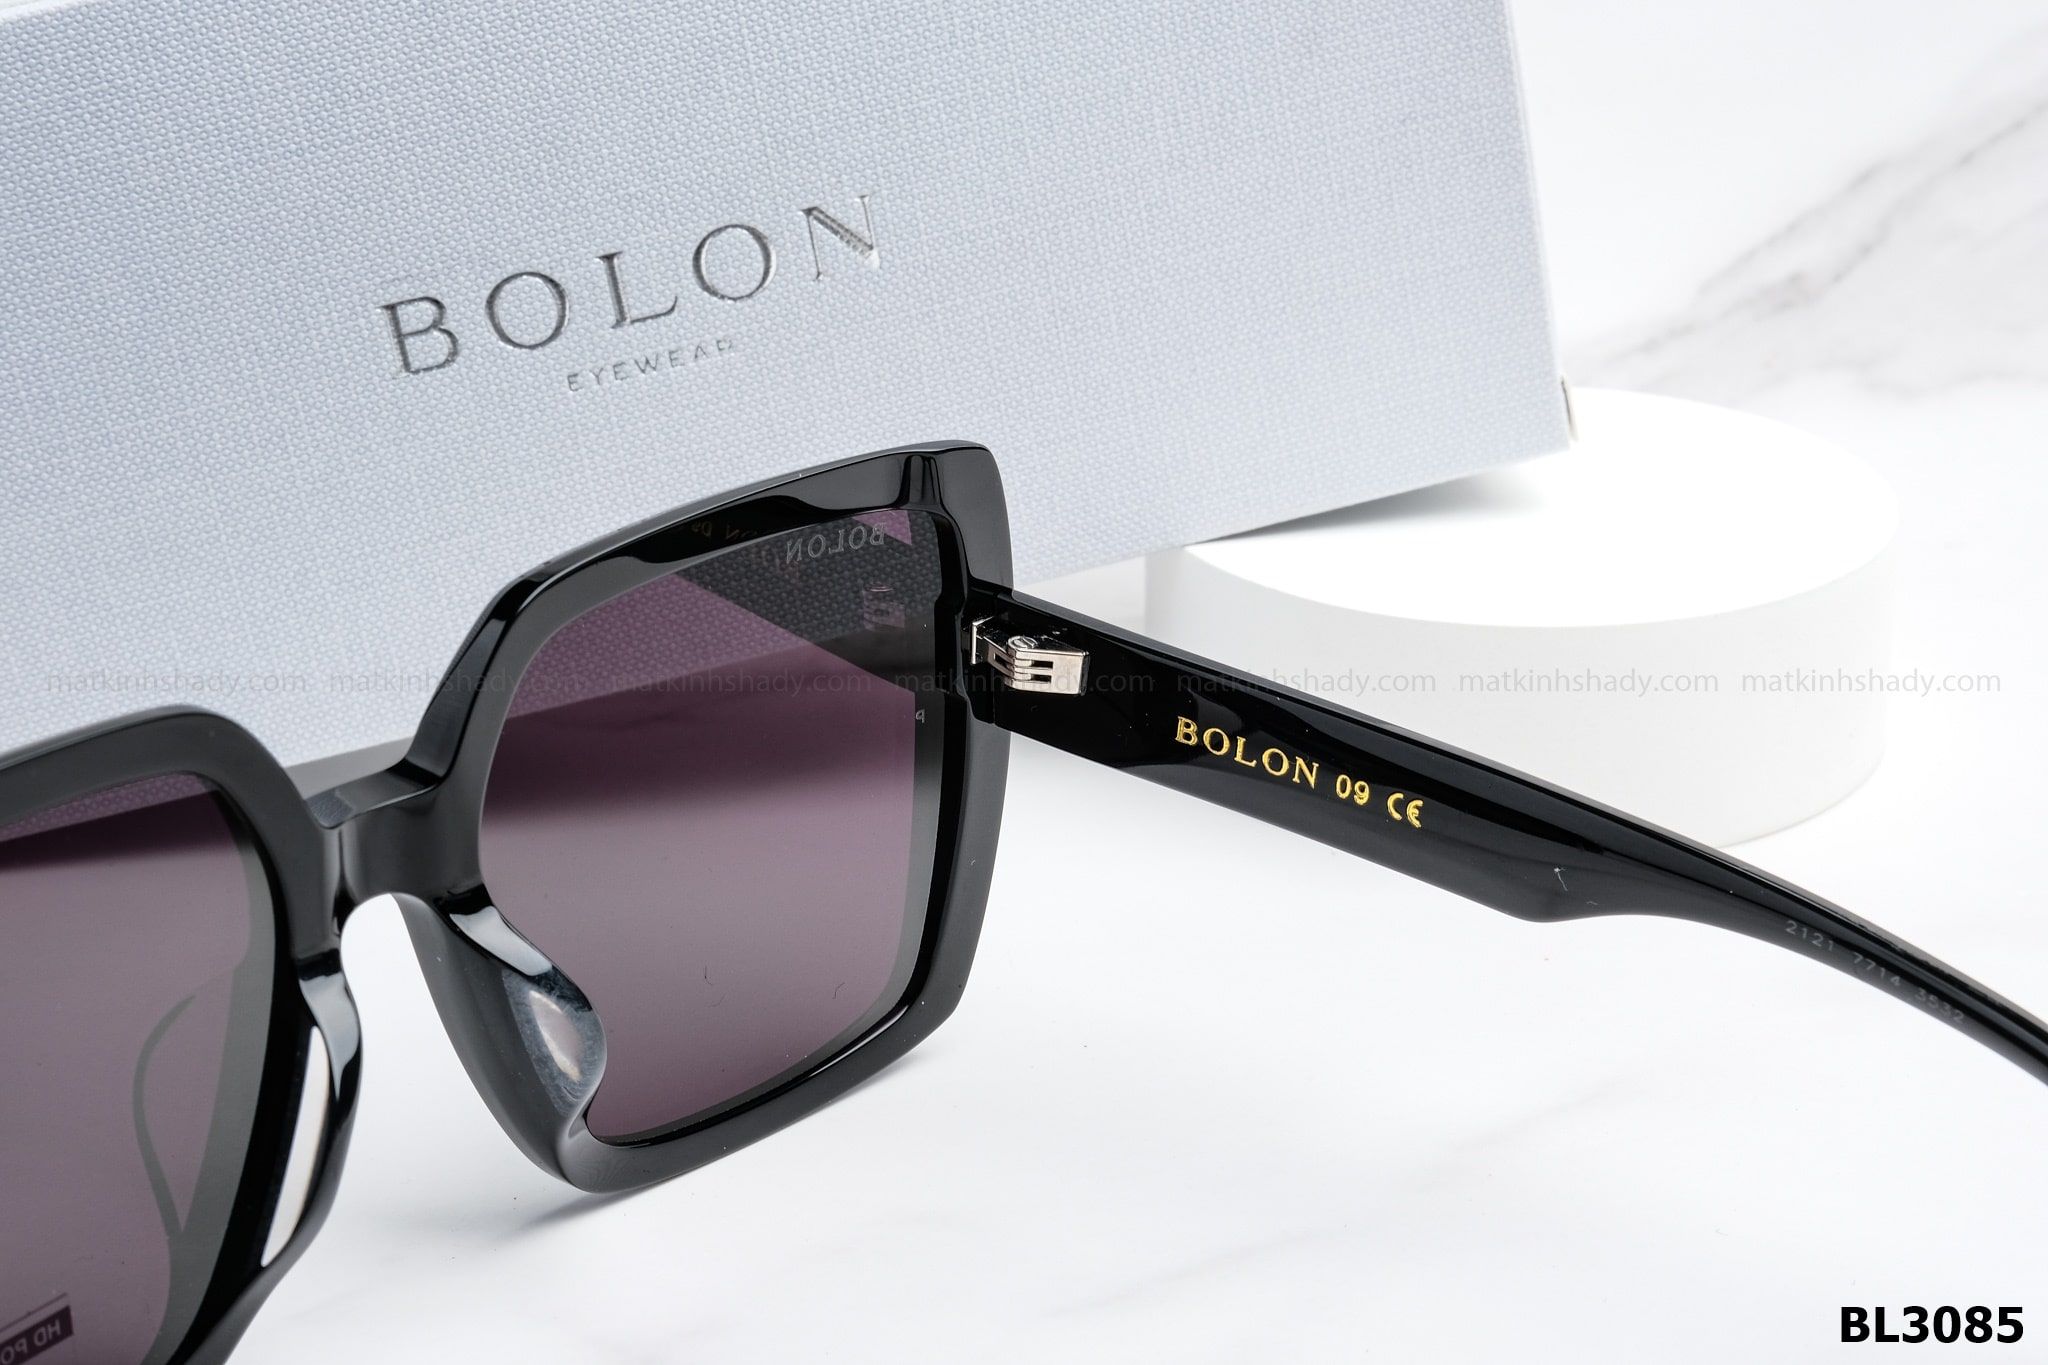  Bolon Eyewear - Sunglasses - BL3085 